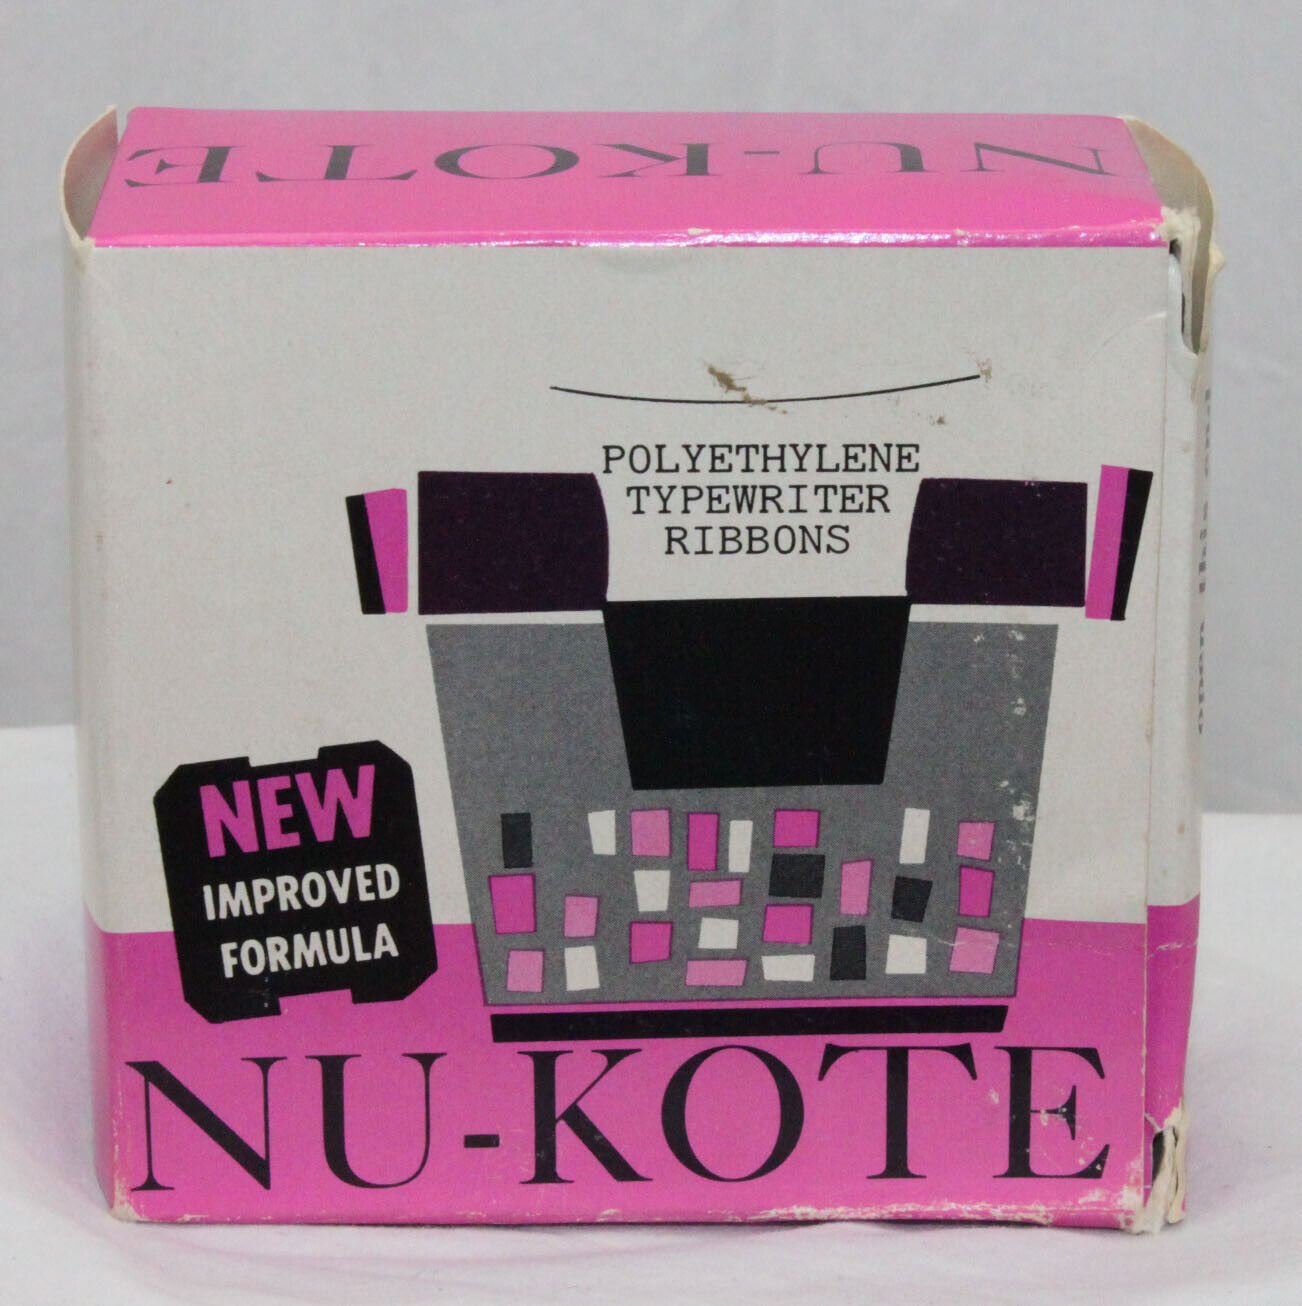 5 IBM NU-KOTE Black Film Typewriter Ribbons B42 Polyethylene Vintage in Box